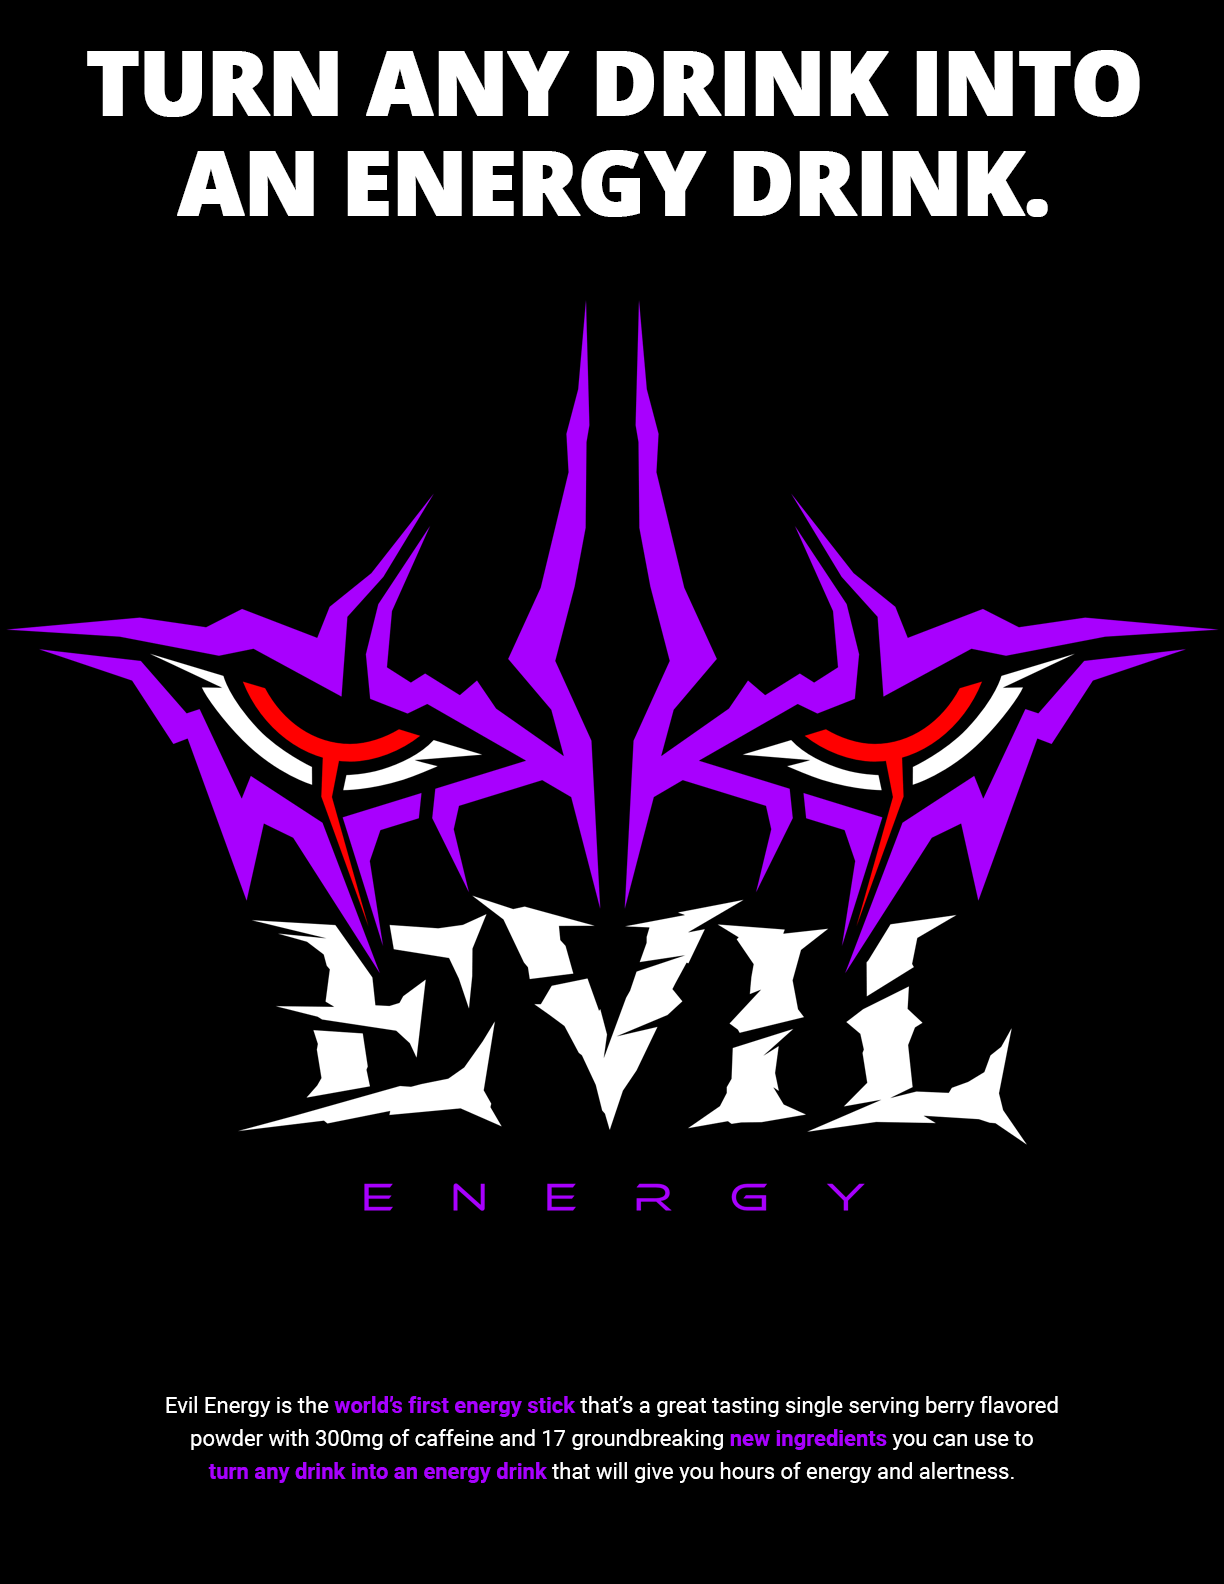 Evil Energy Reps – Taking Evil Energy to the World